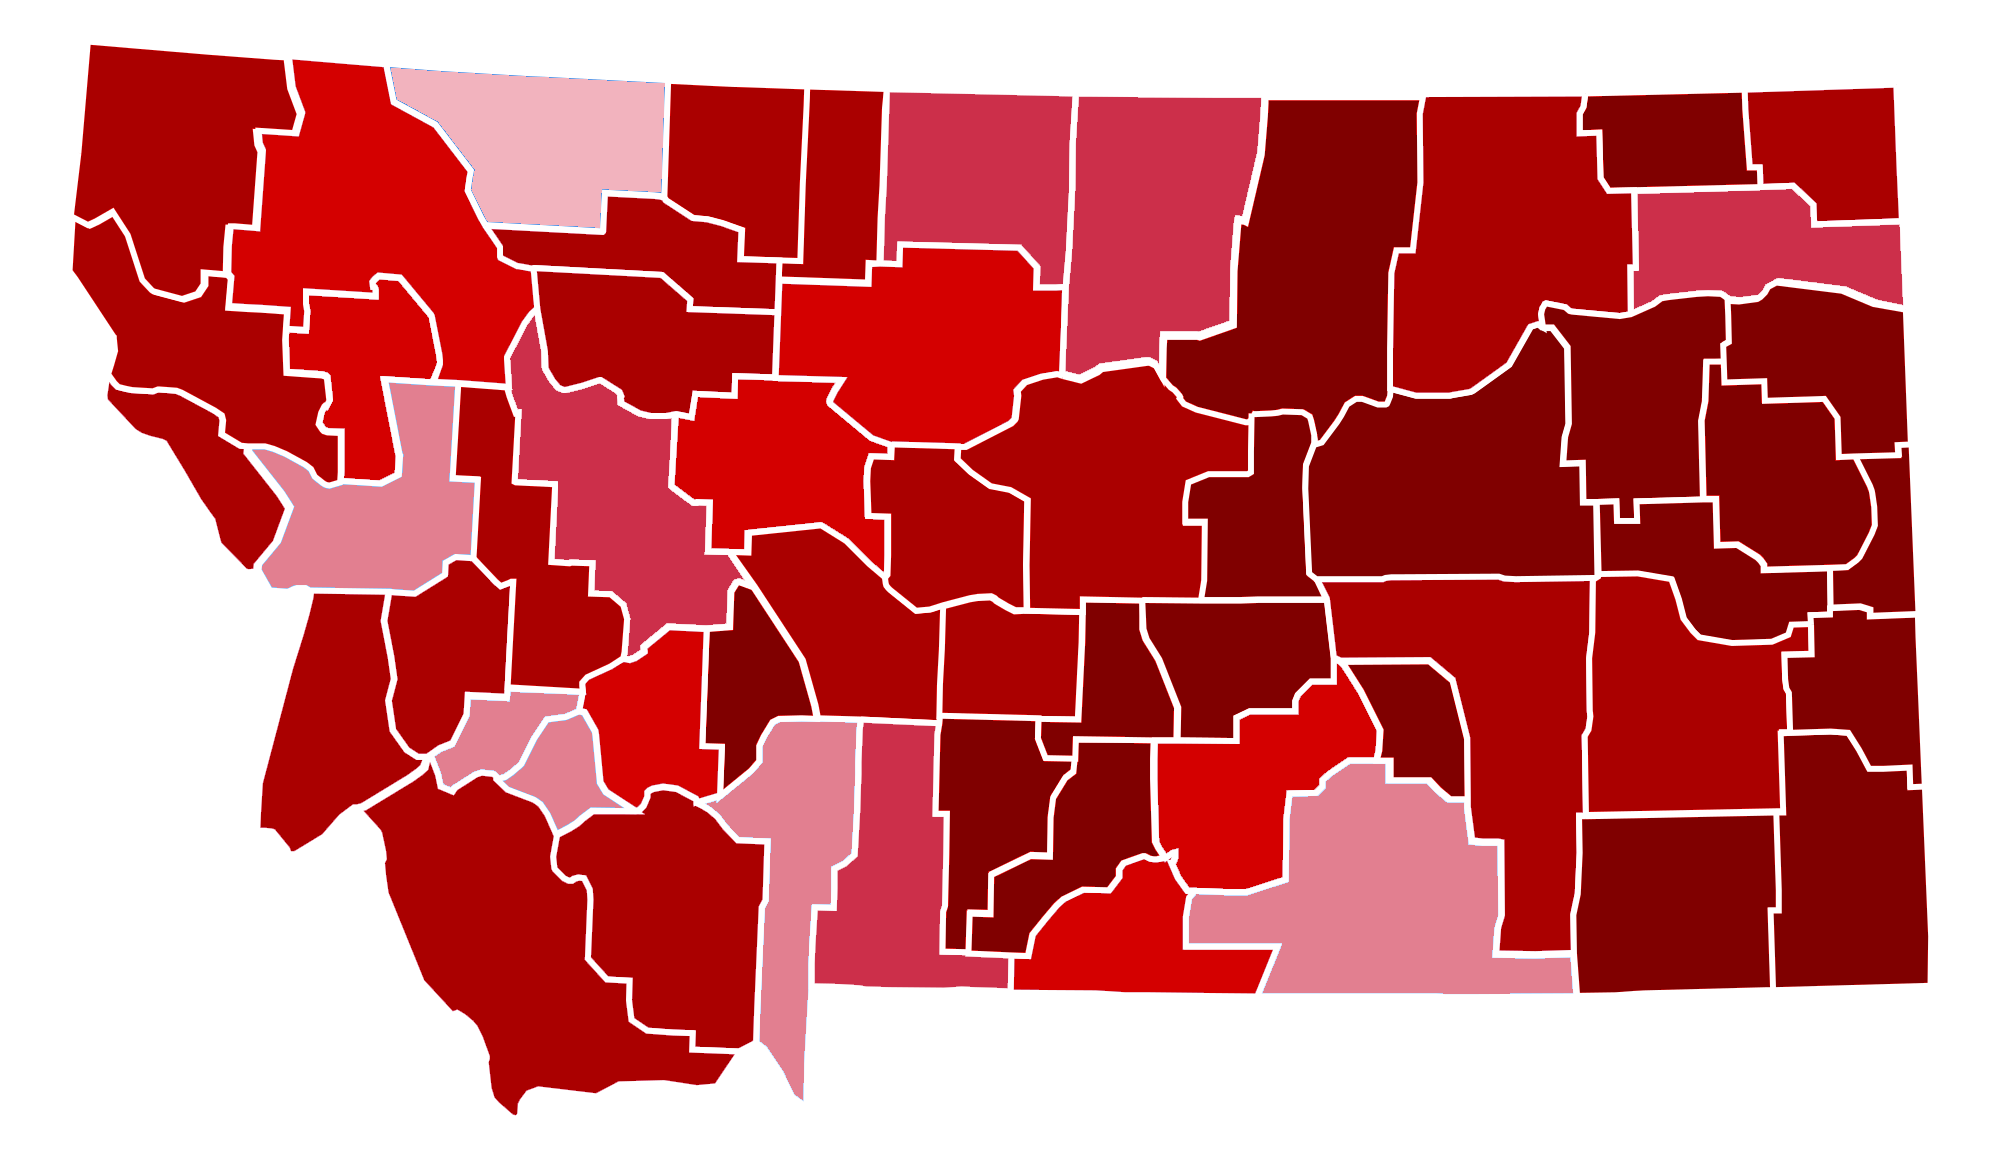 Montana_Presidential_Election_Results_2016_Republican_Landslide_15.06%.png